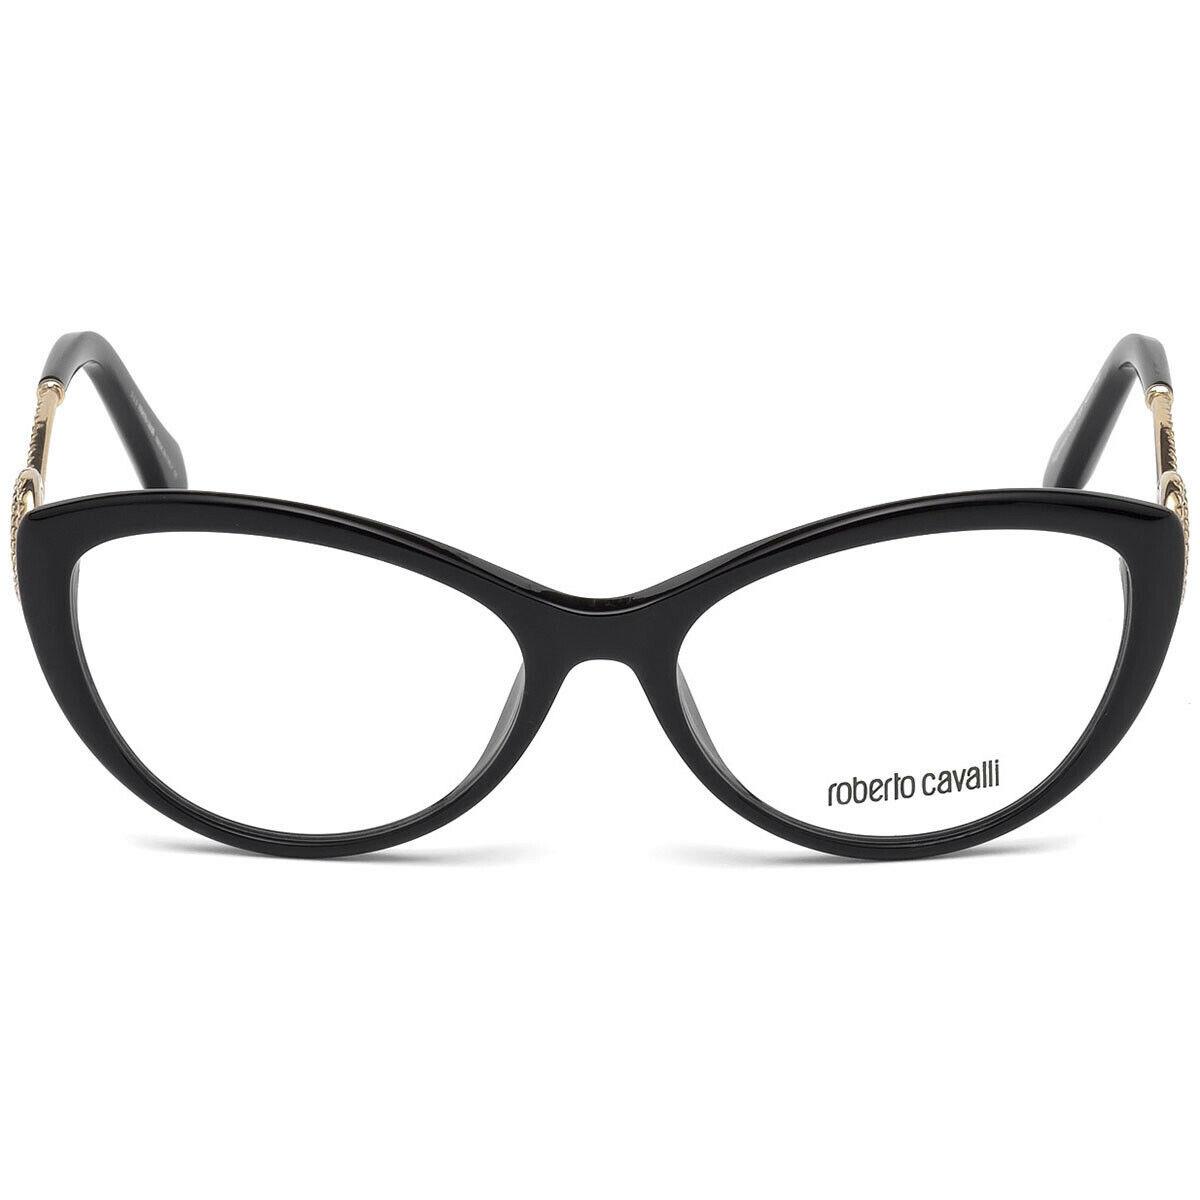 Roberto Cavalli Argentario RC 5009 Black 001 Eyeglasses Frame 54-16-140 Cat Eye